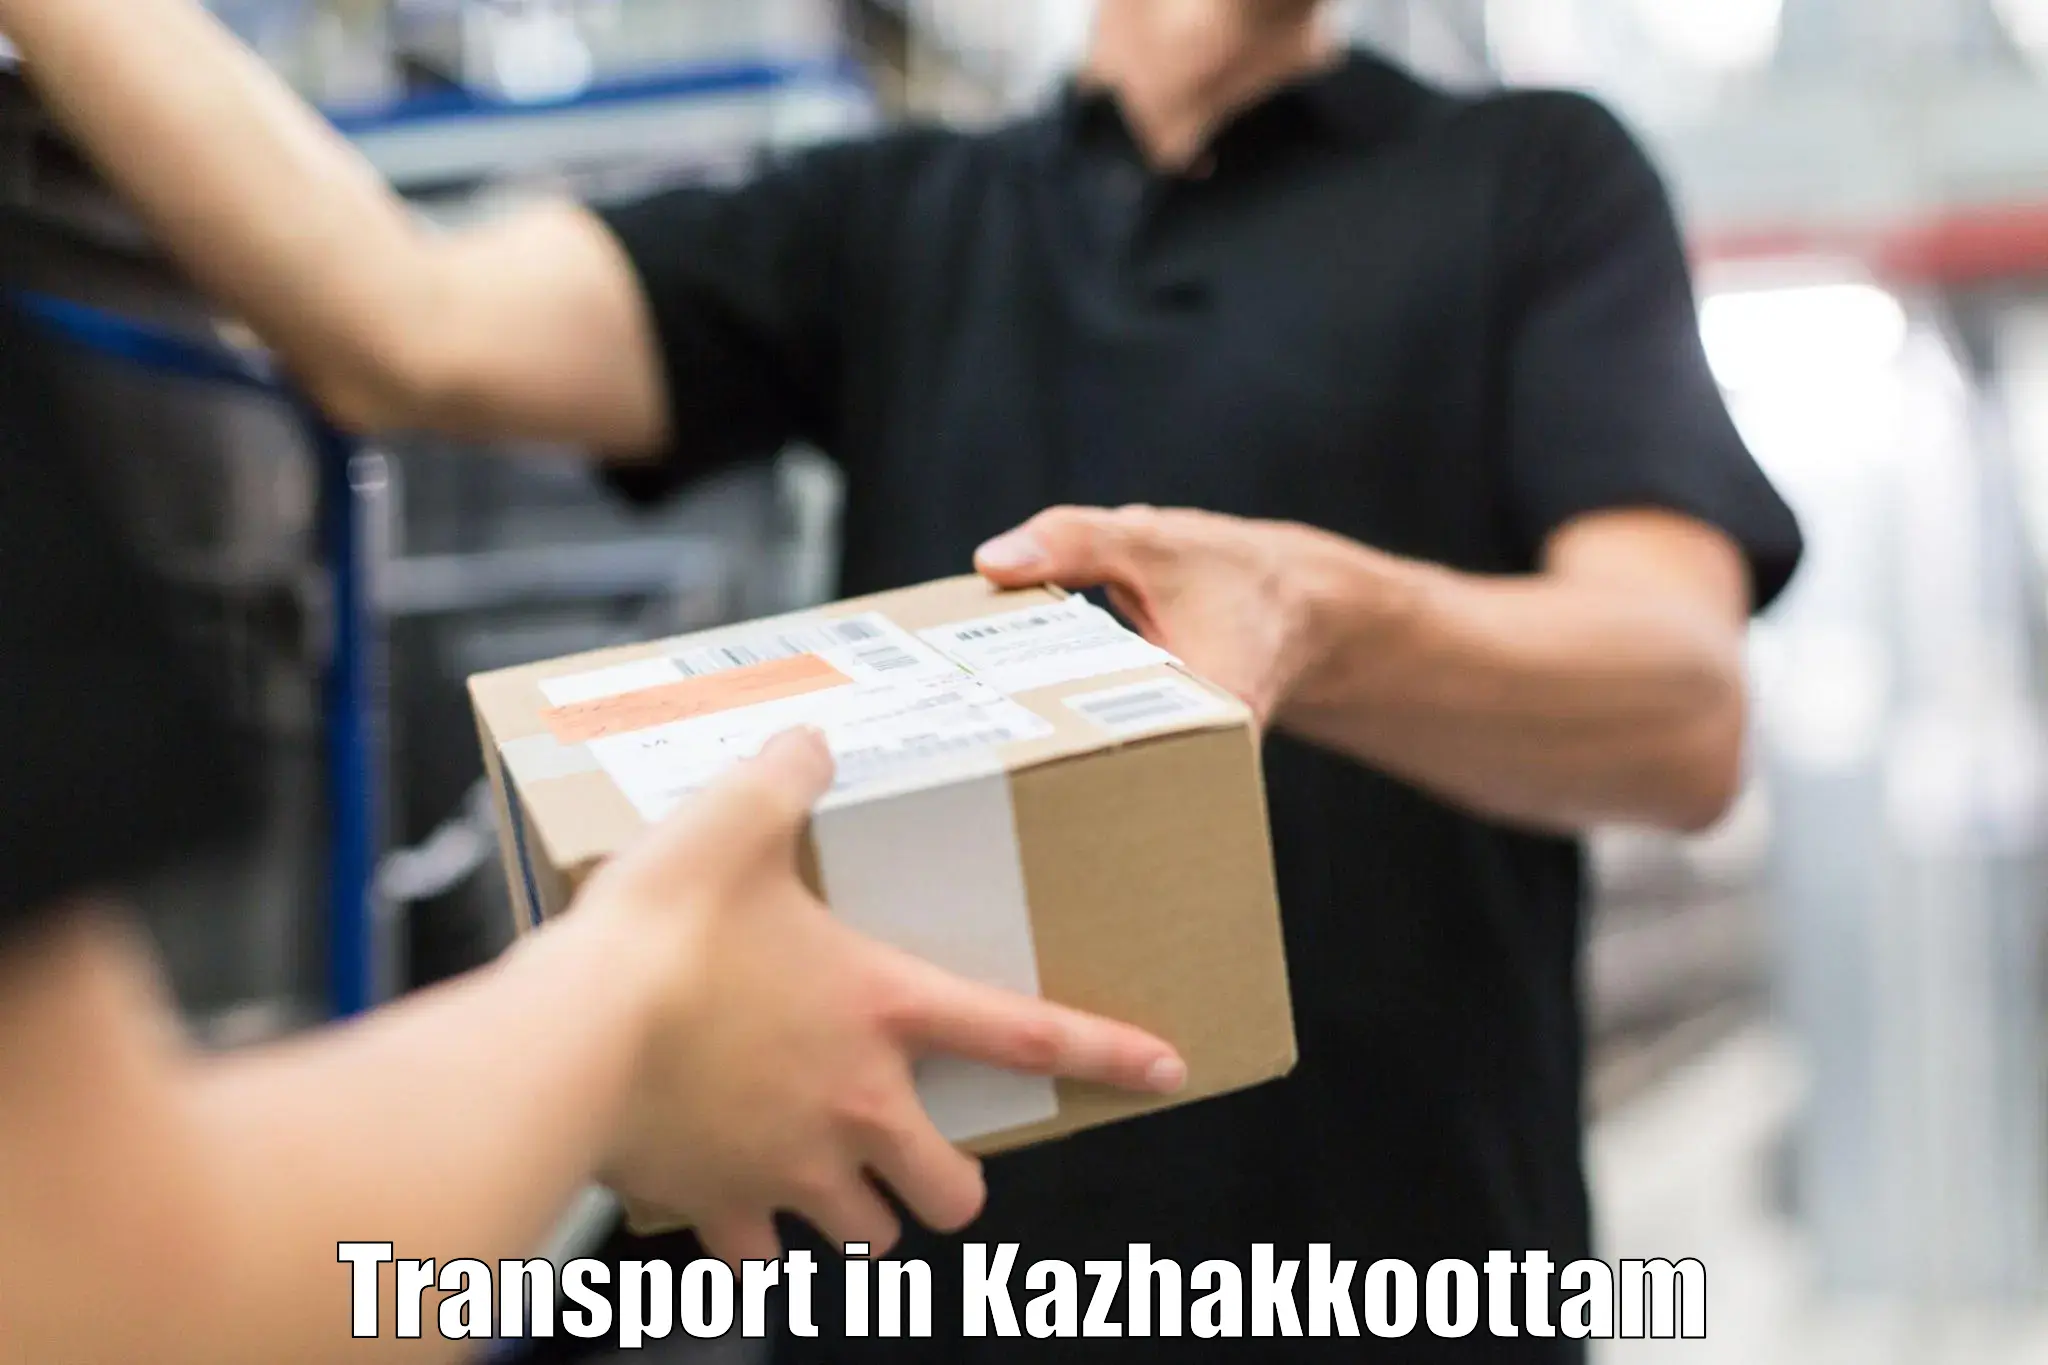 Nearest transport service in Kazhakkoottam